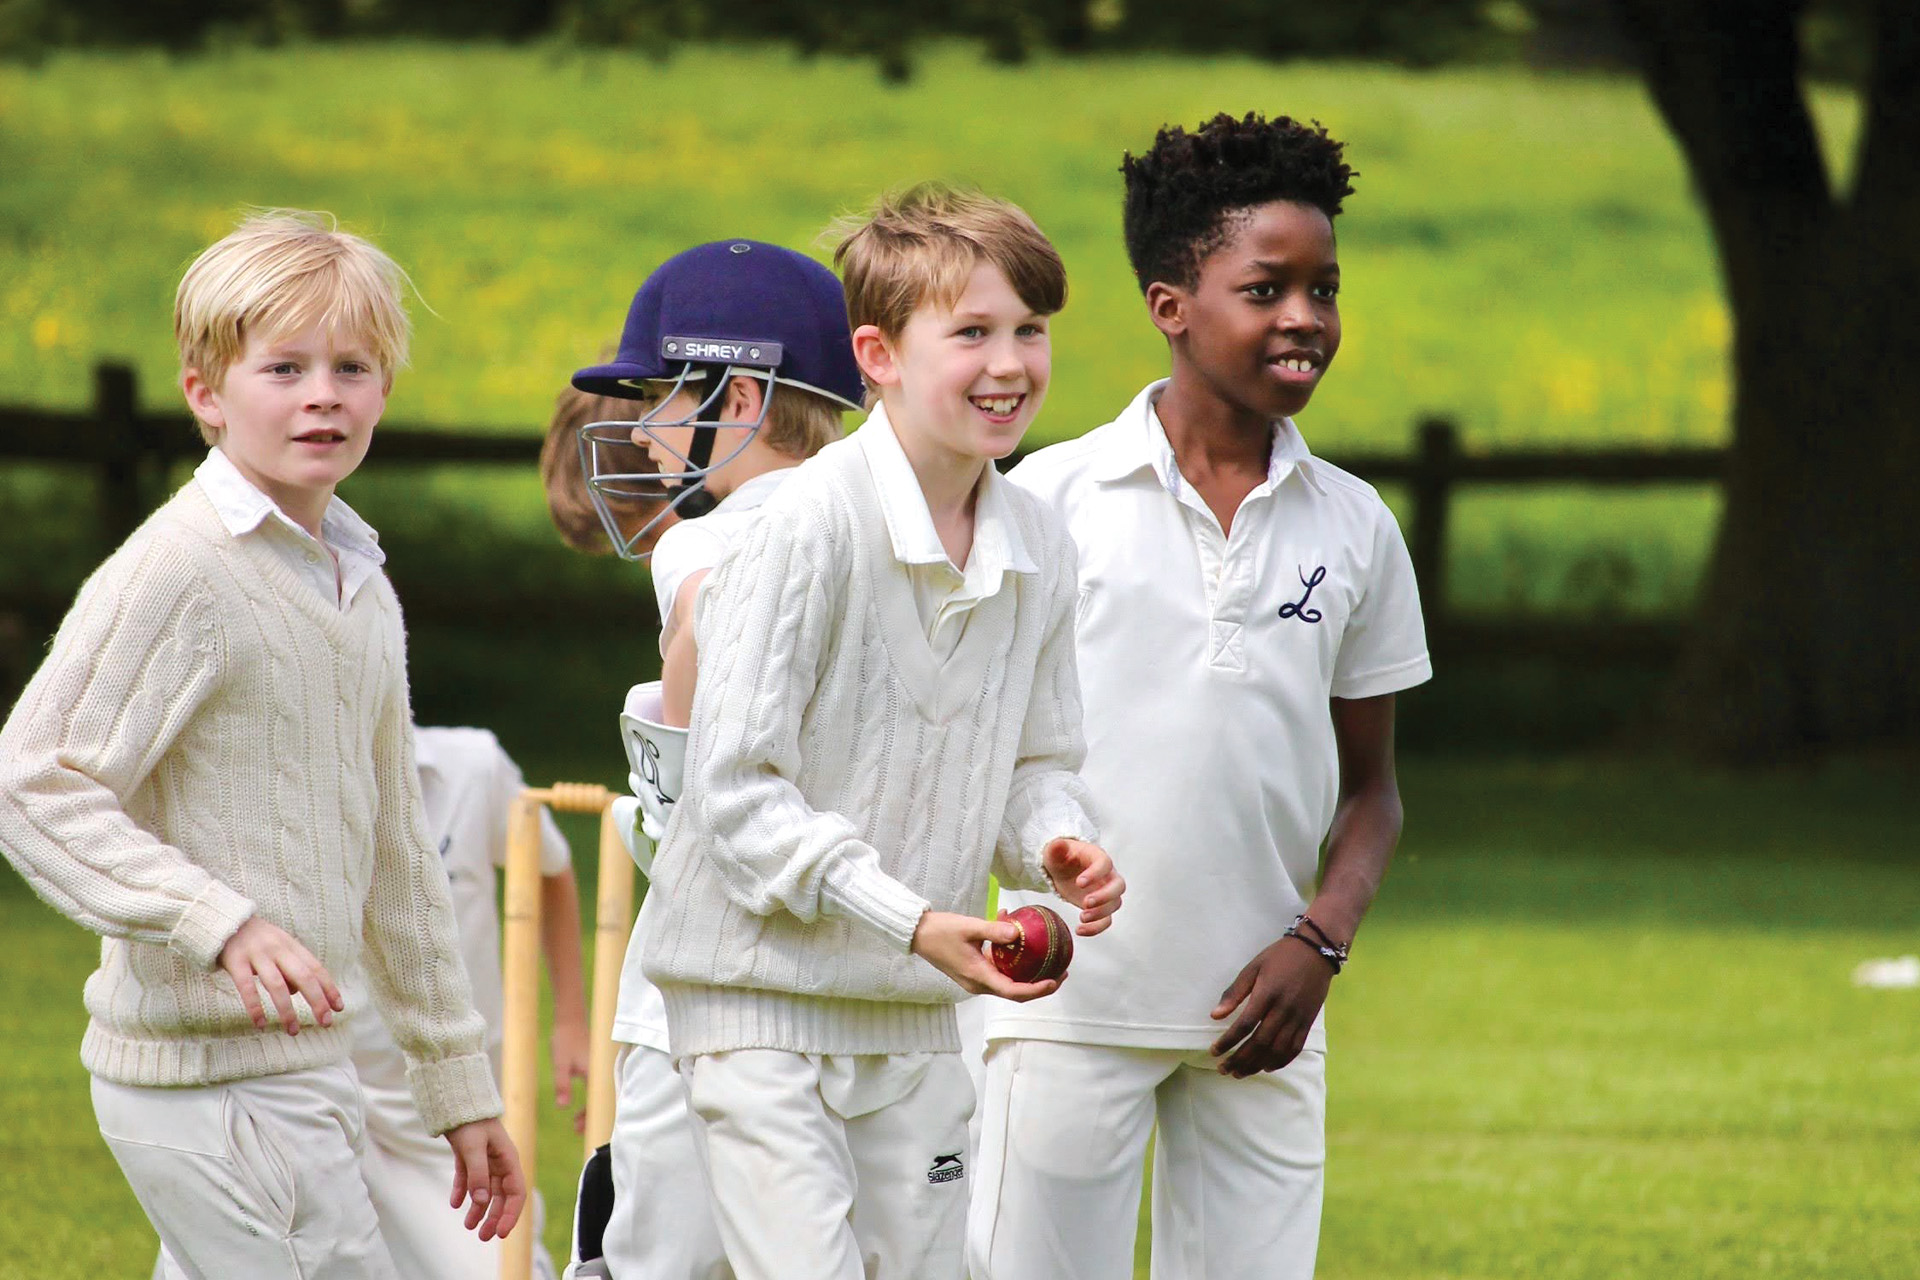 Ludgrove School, Berkshire playing cricket